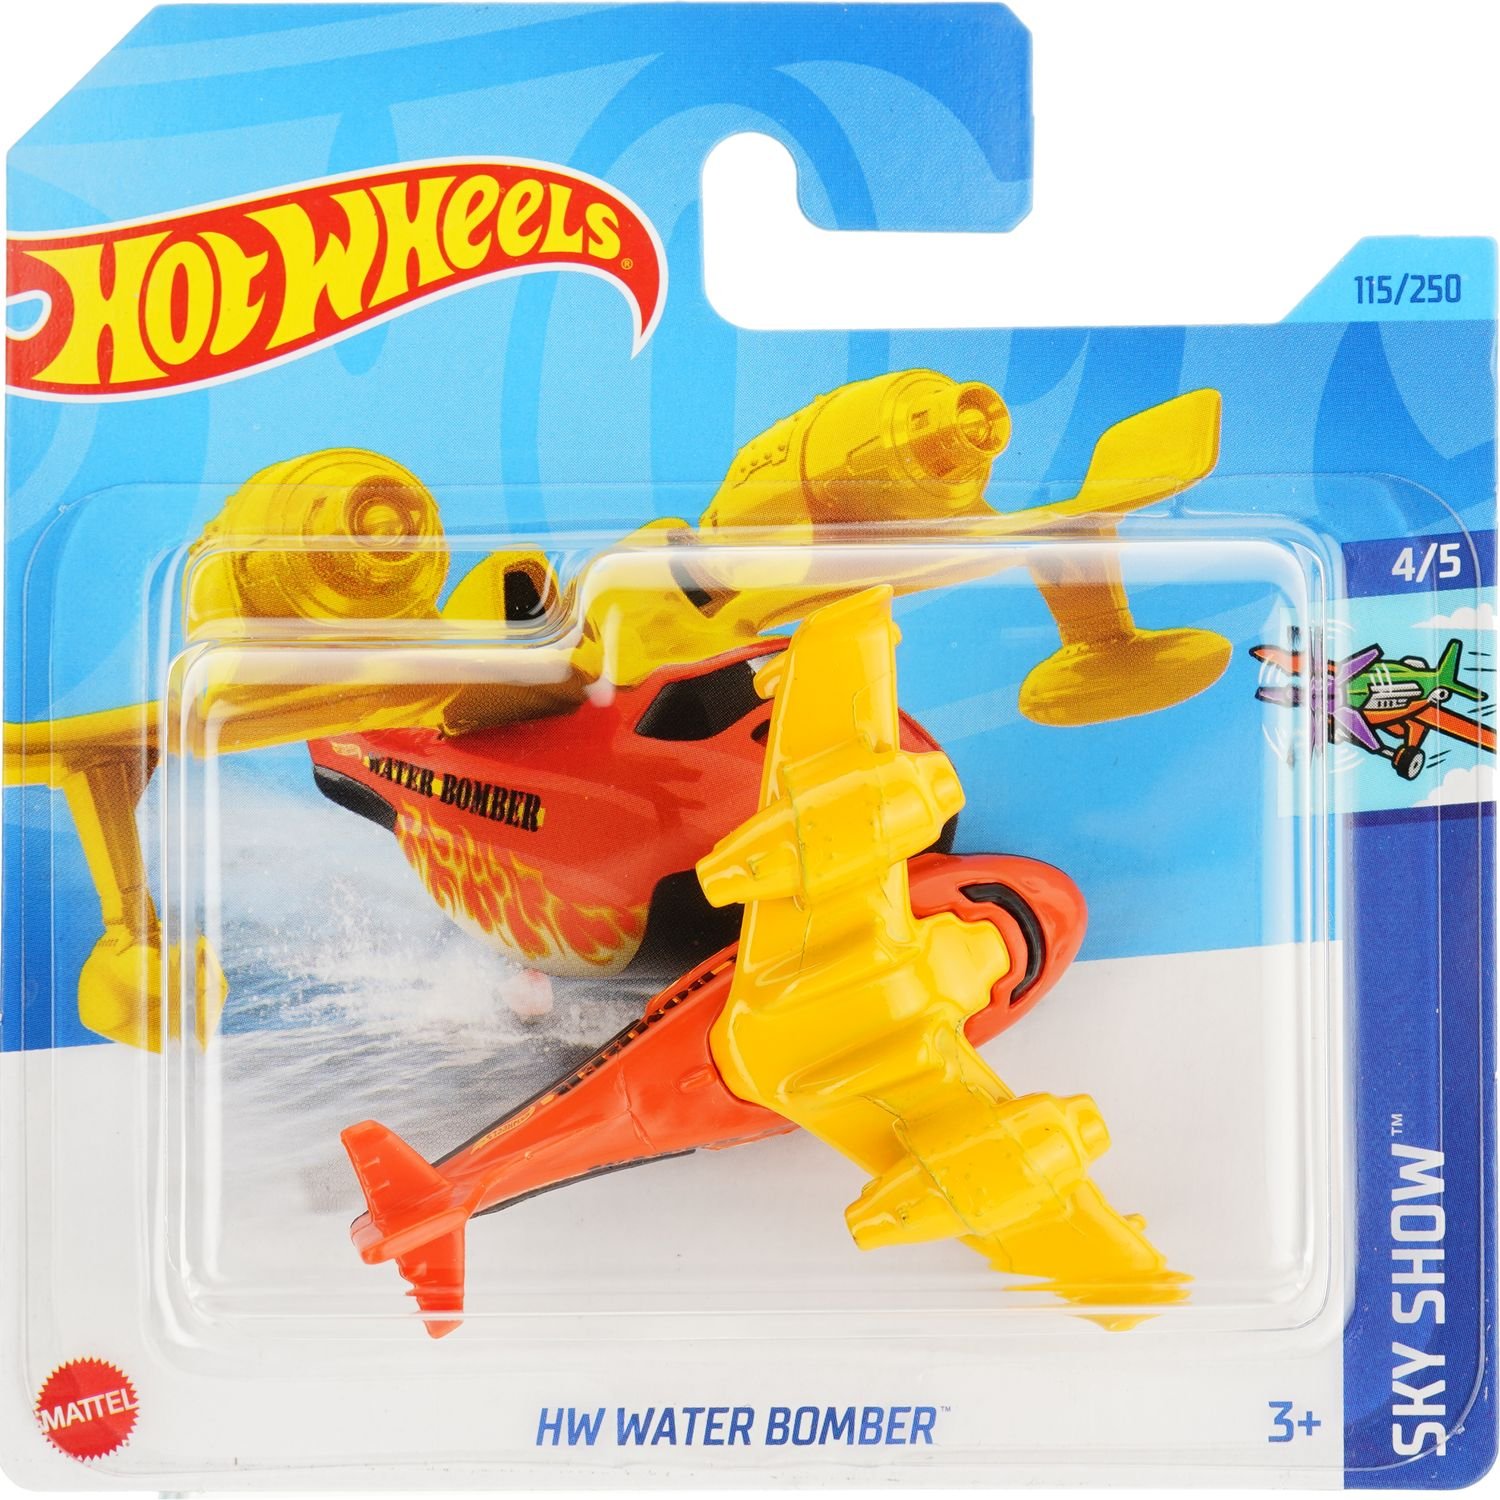 Базовая машинка Hot Wheels Sky Show HW Water Bomber желтая с оранжевым (5785) - фото 1